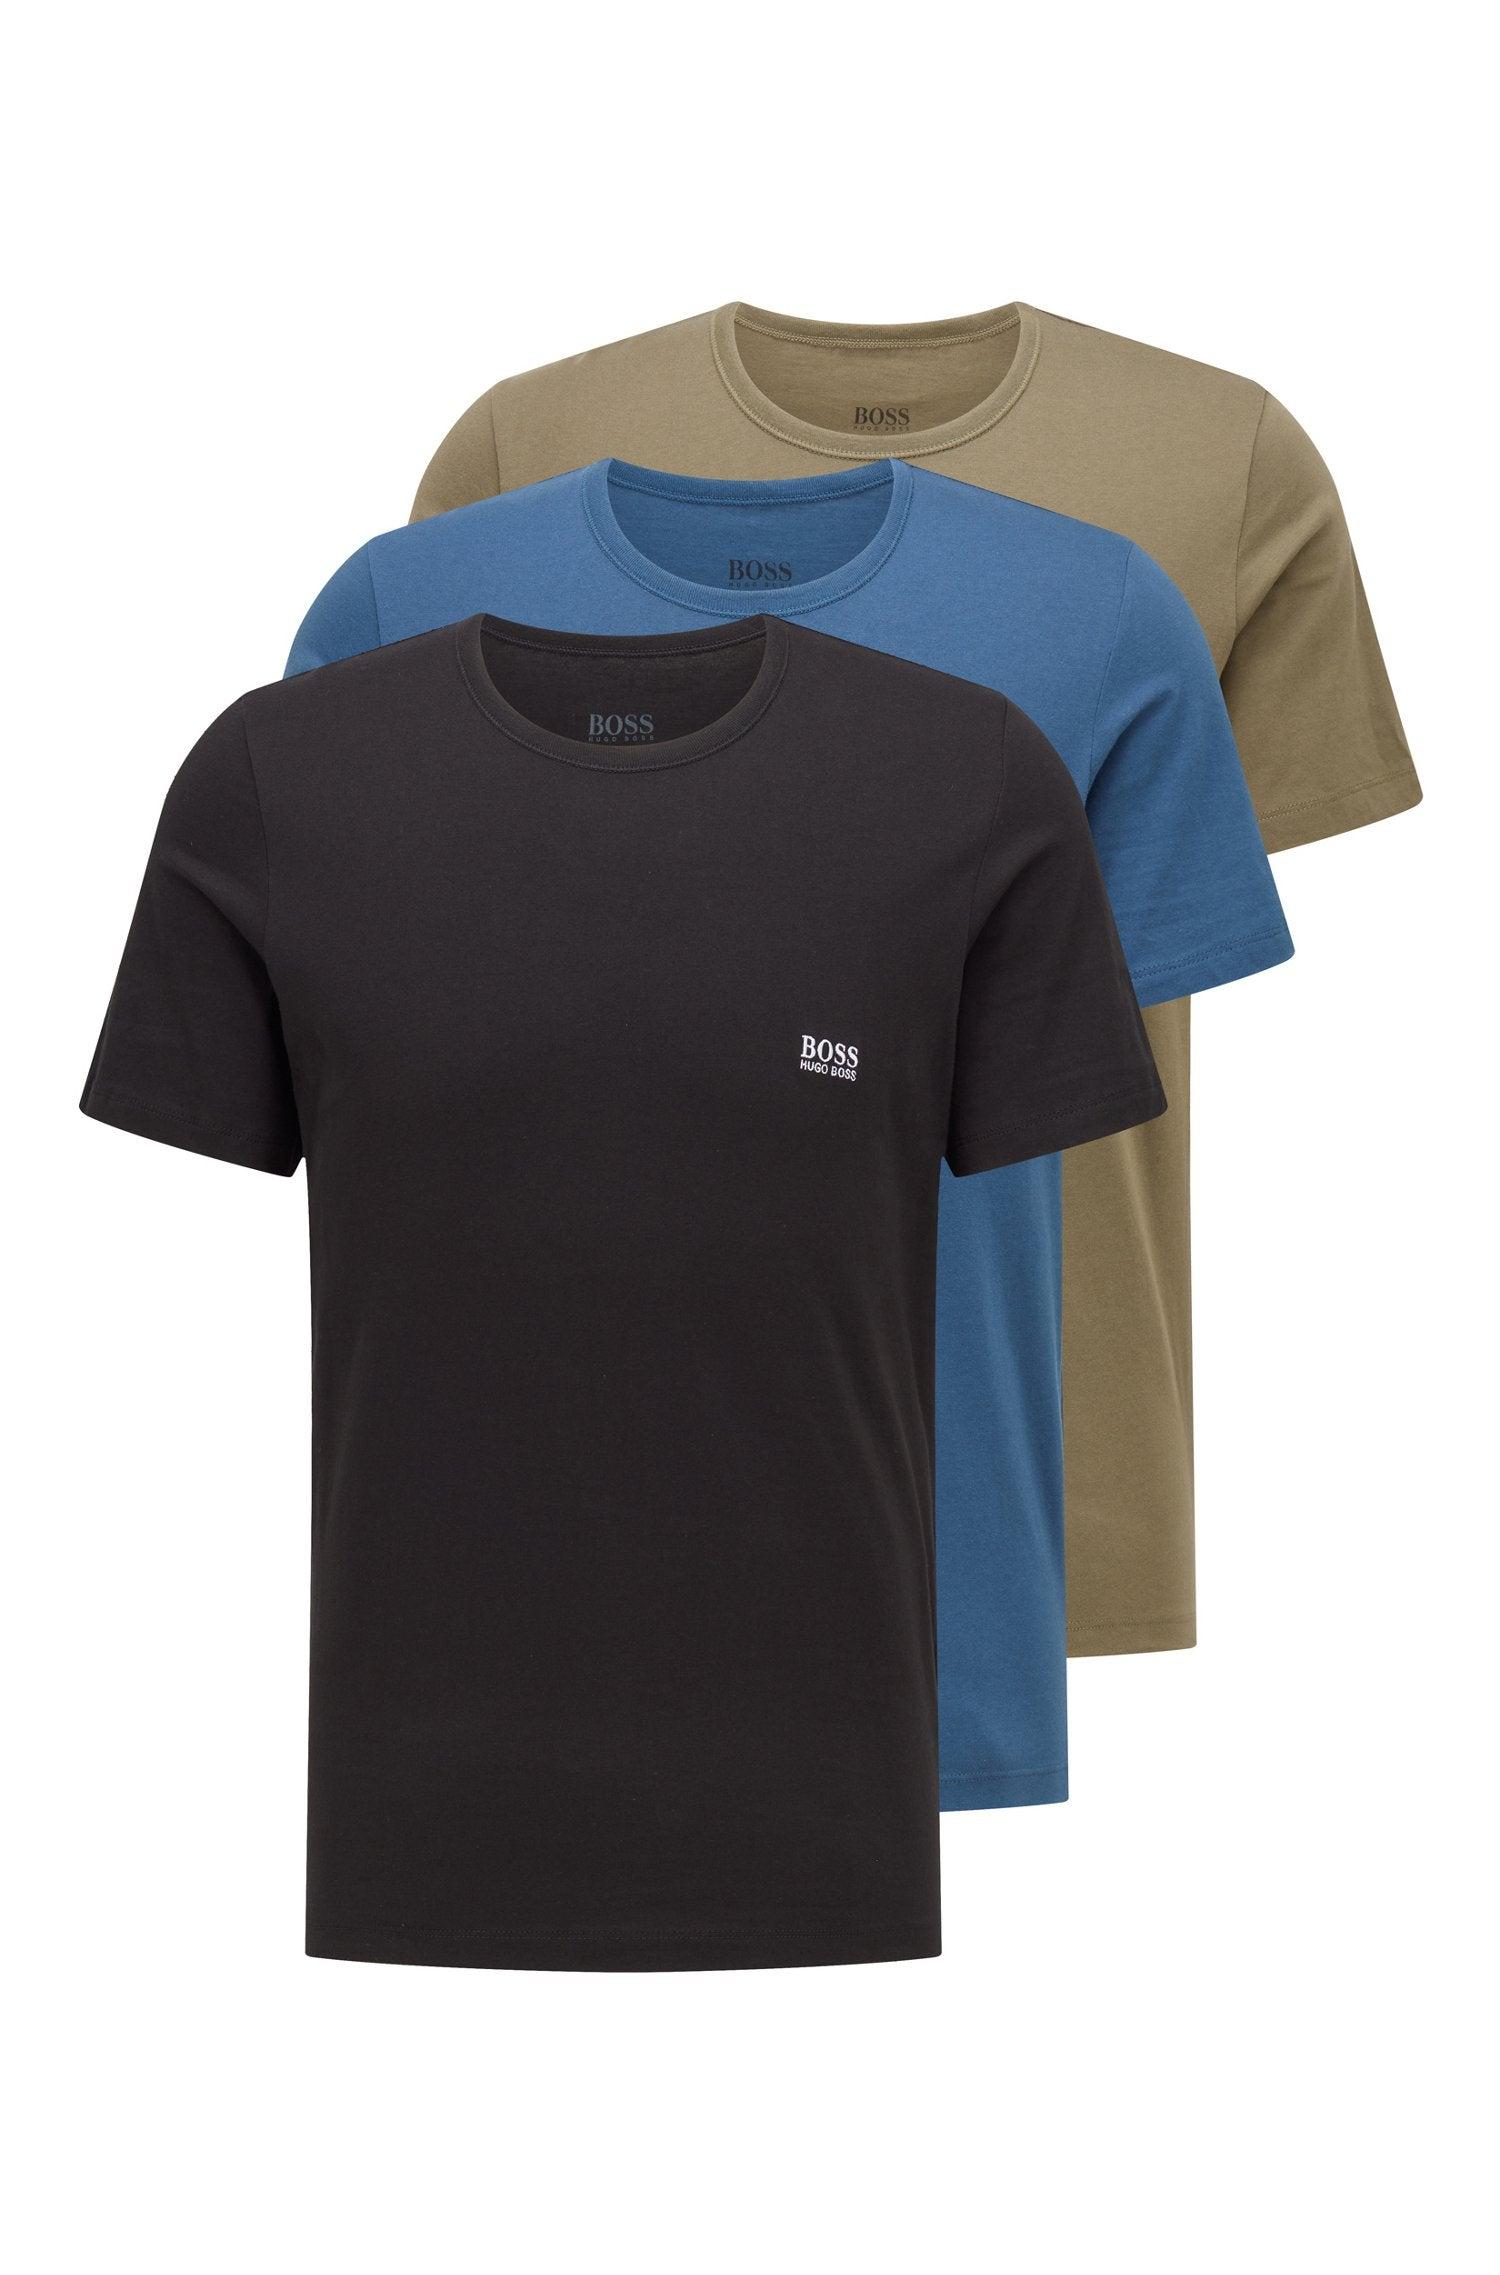 BOSS Multi-Coloured Three-Pack Crew Neck T-Shirt 